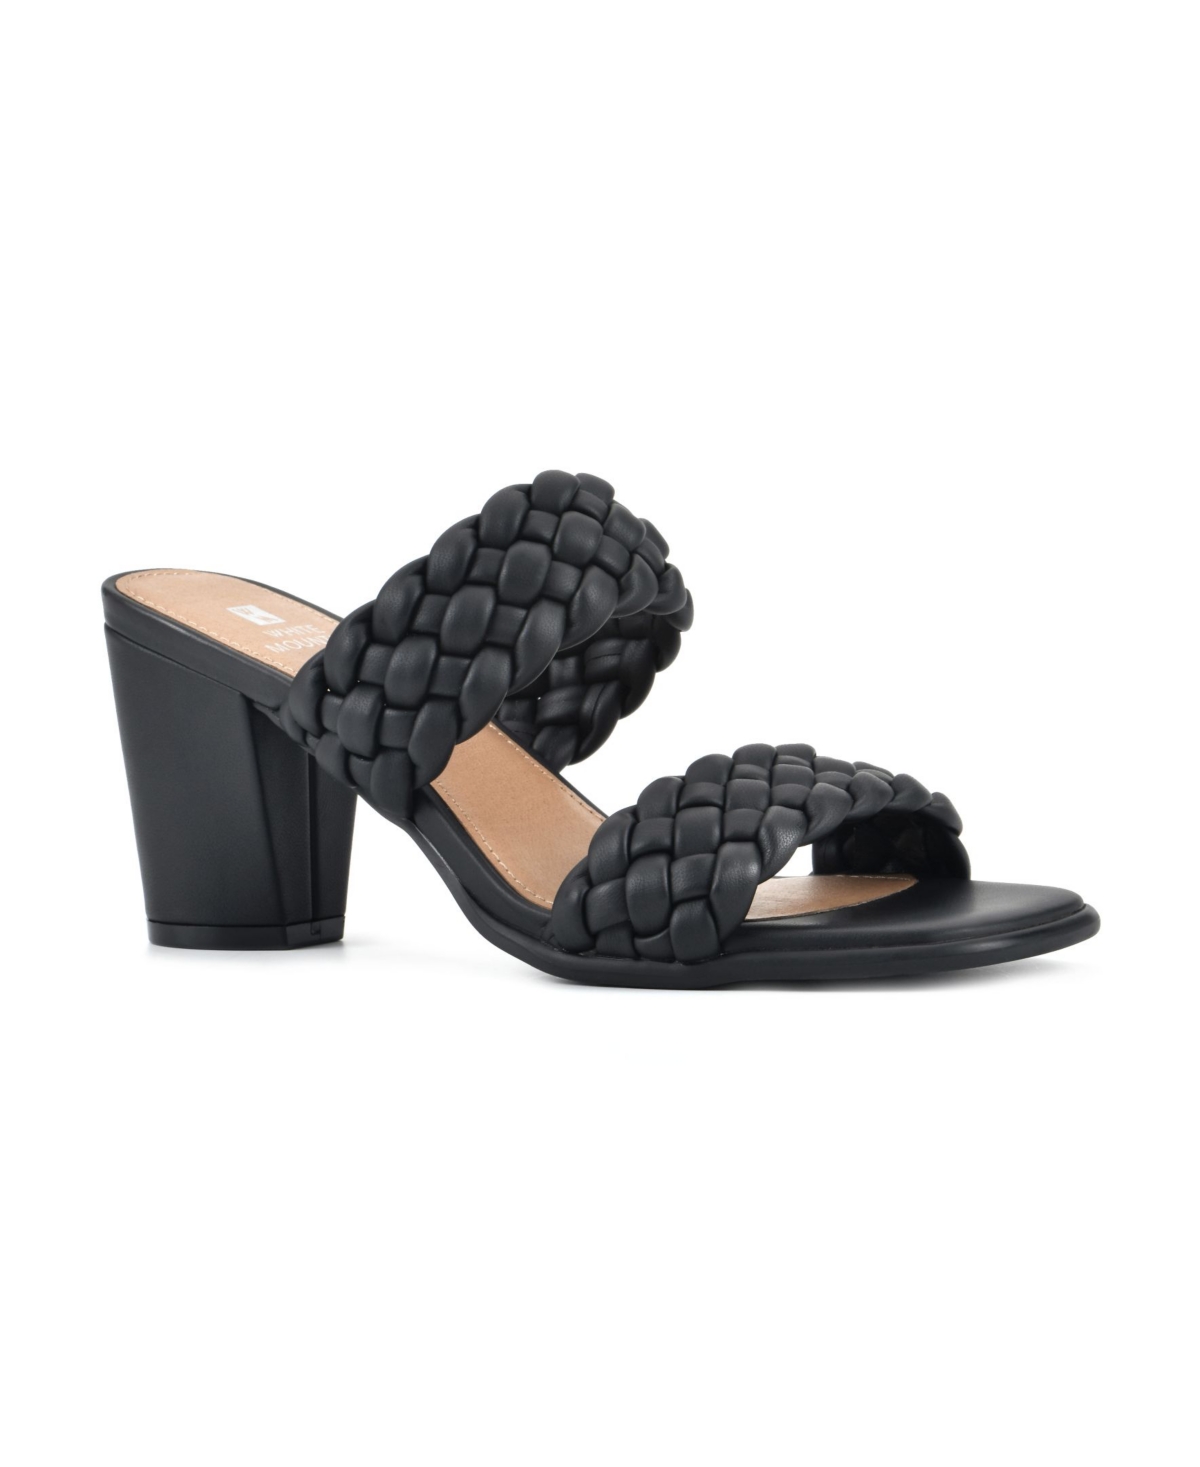 Women's By Far Mule Dress Sandals - Black, Smooth